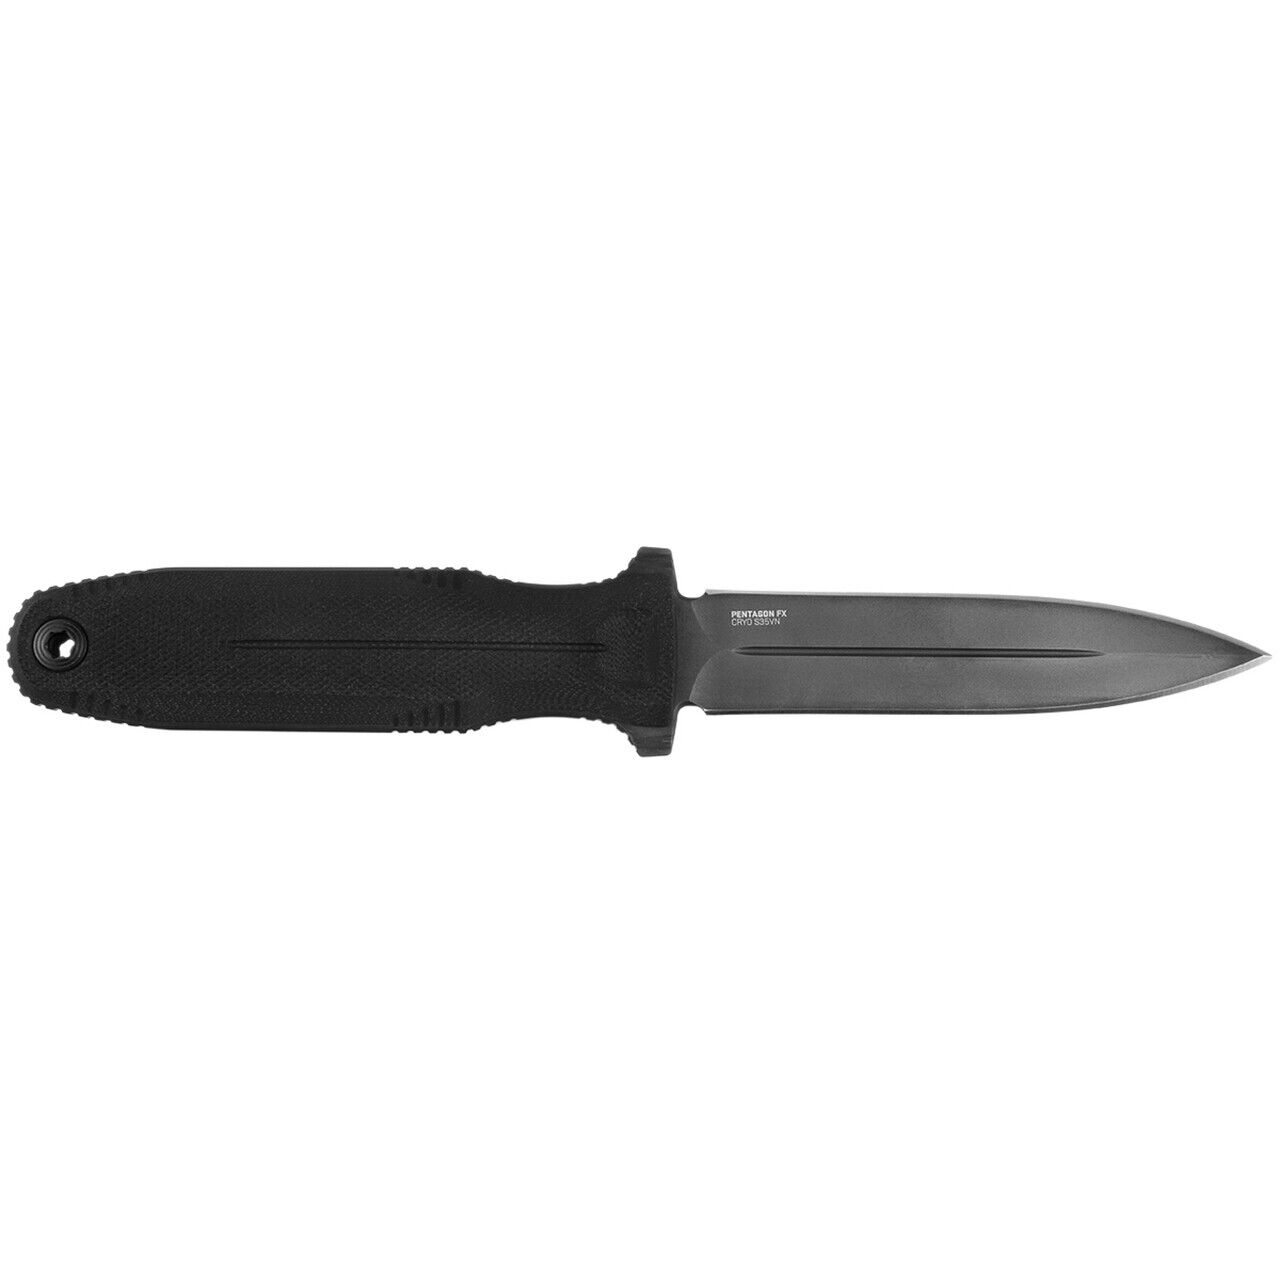 SOG Knives Pentagon FX Black G-10 CRYO CPM S35VN Stainless Steel 17-61-01-57